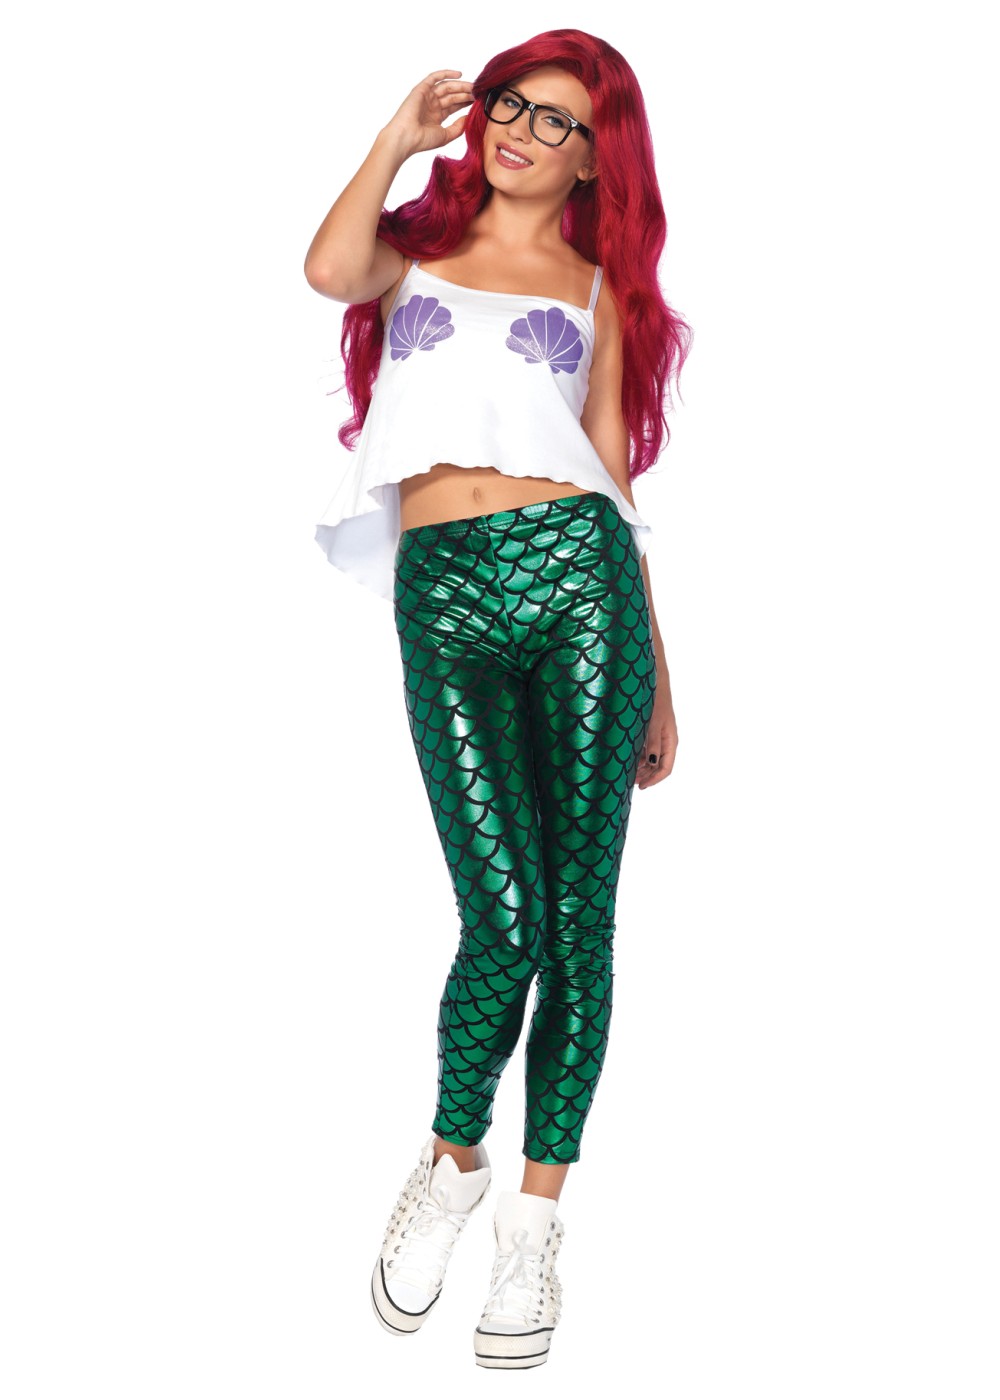 Hipster Mermaid Woman Costume